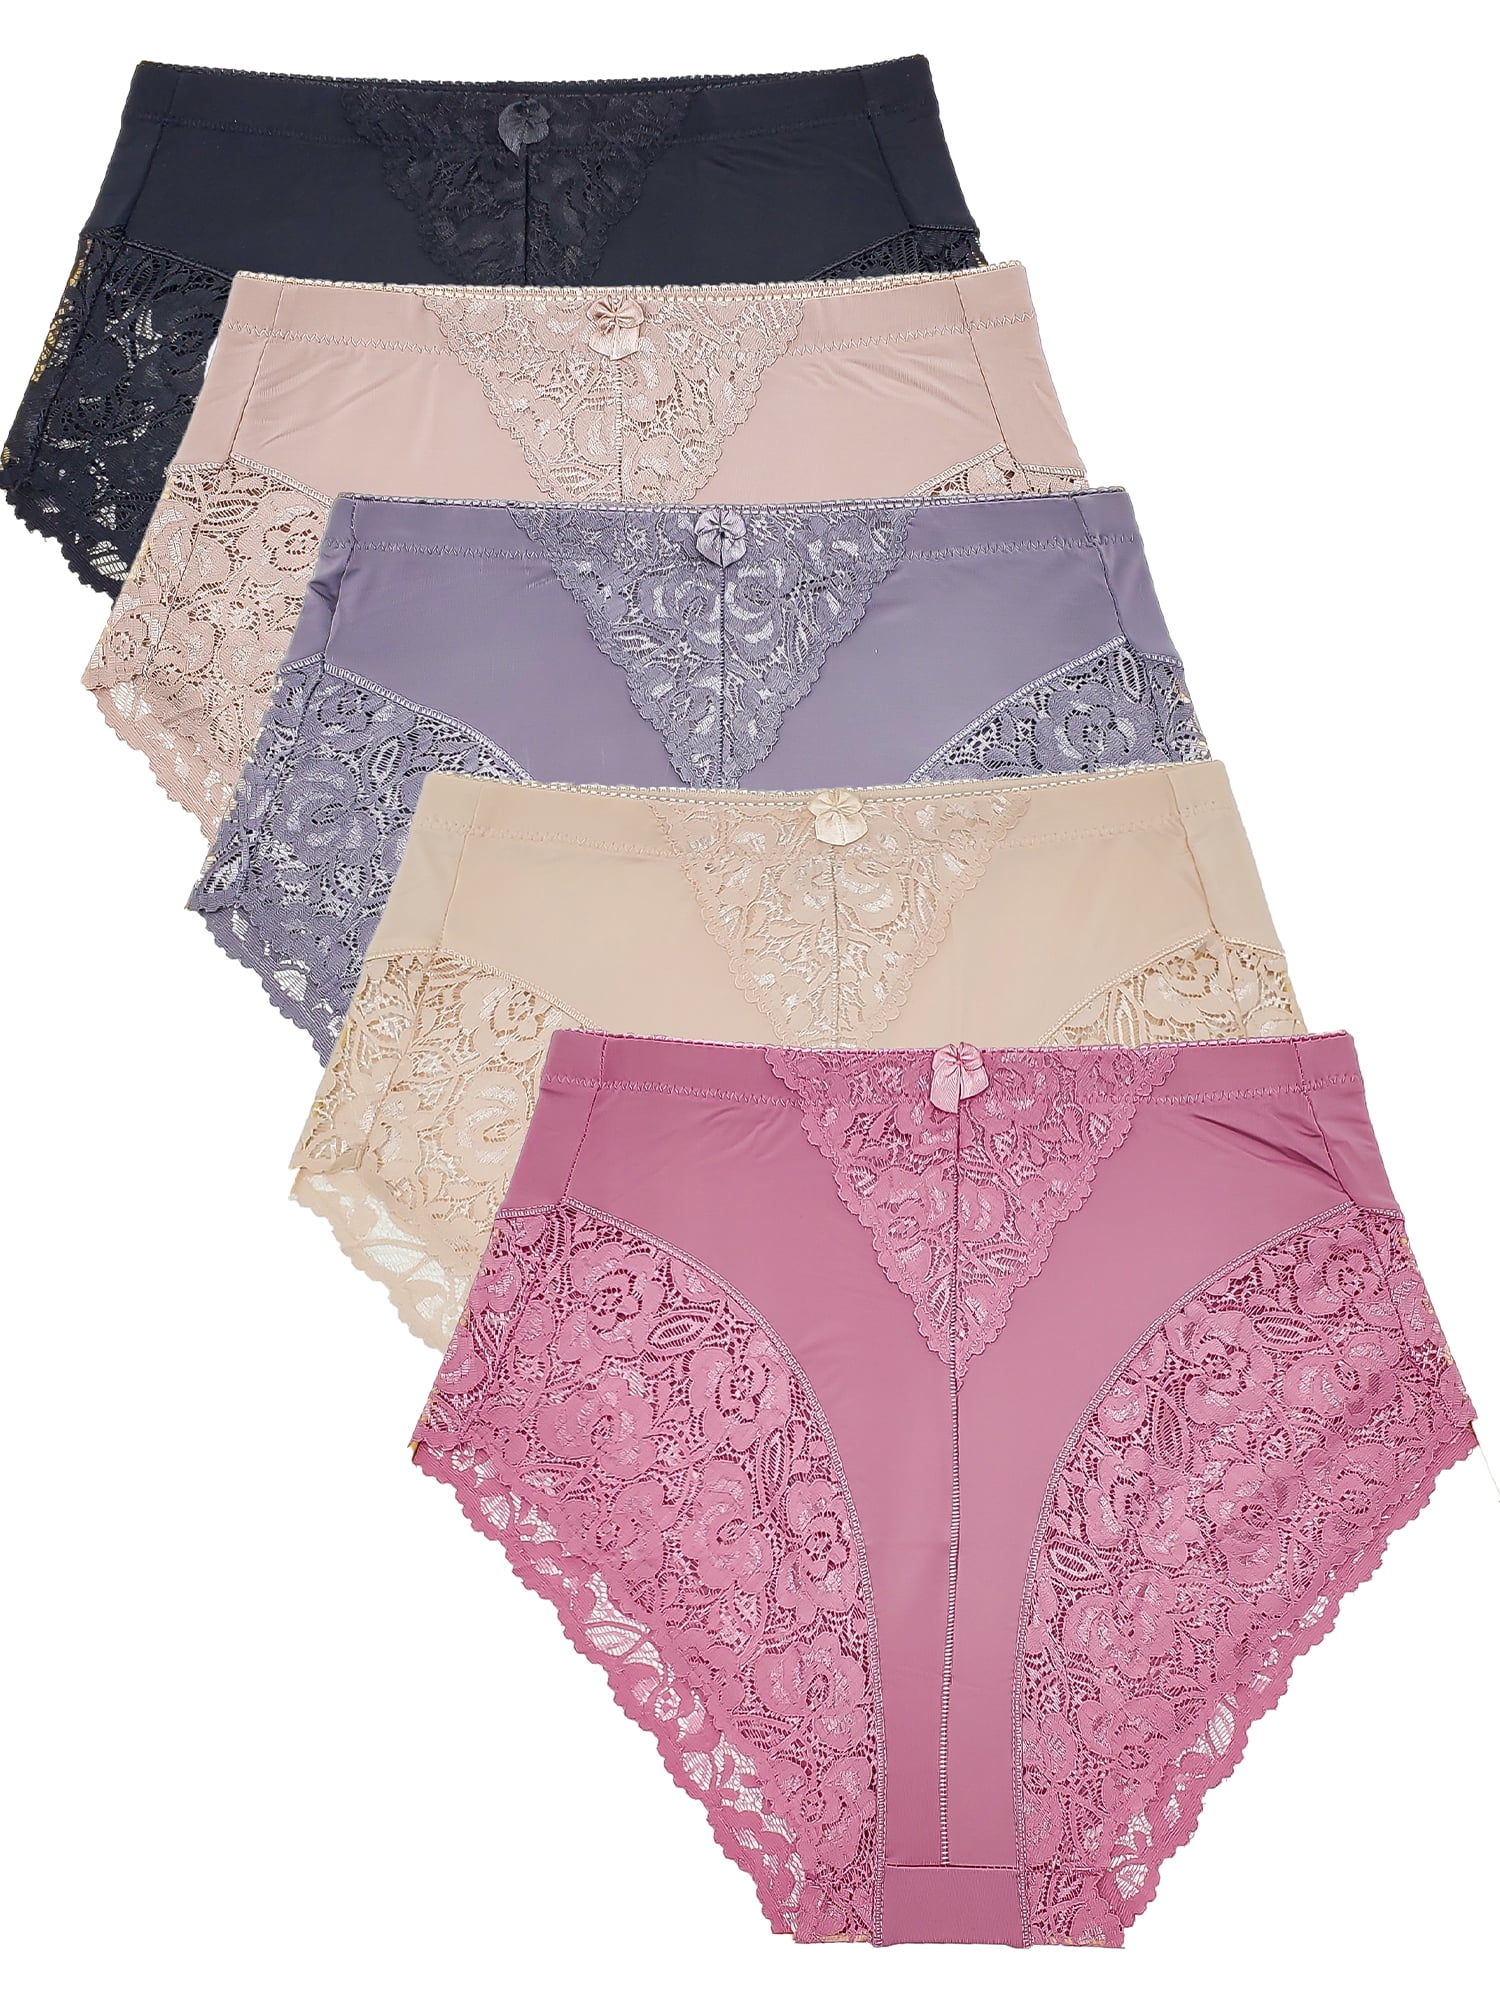 Barbra Lingerie Womens Panties S Plus Size Light Control Full Cover Lace Briefs Underwear